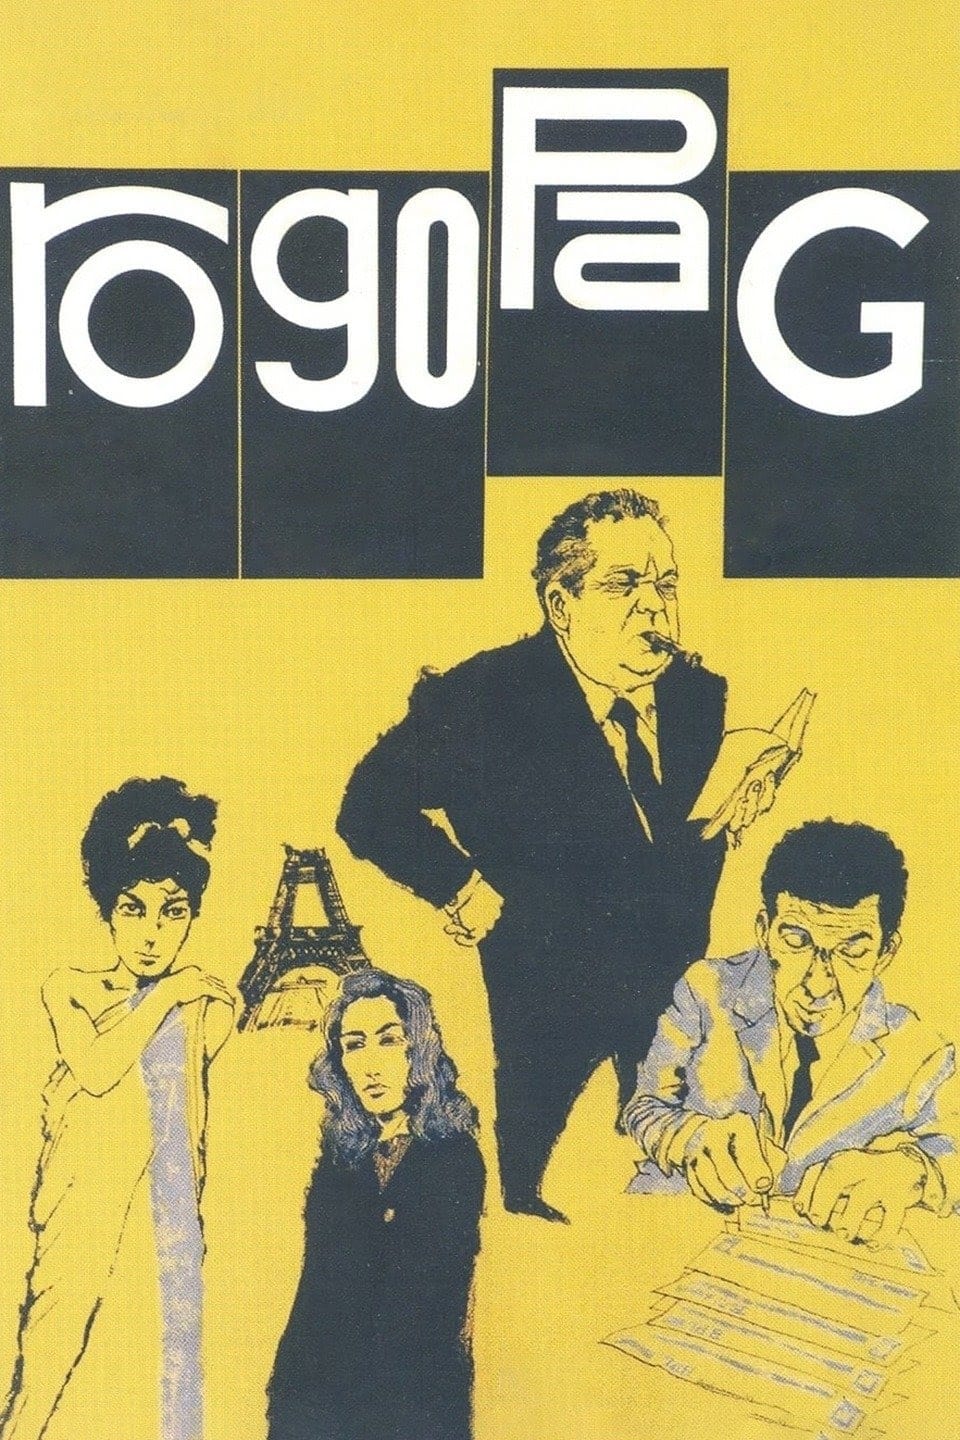 Ro.Go.Pa.G. (1963)